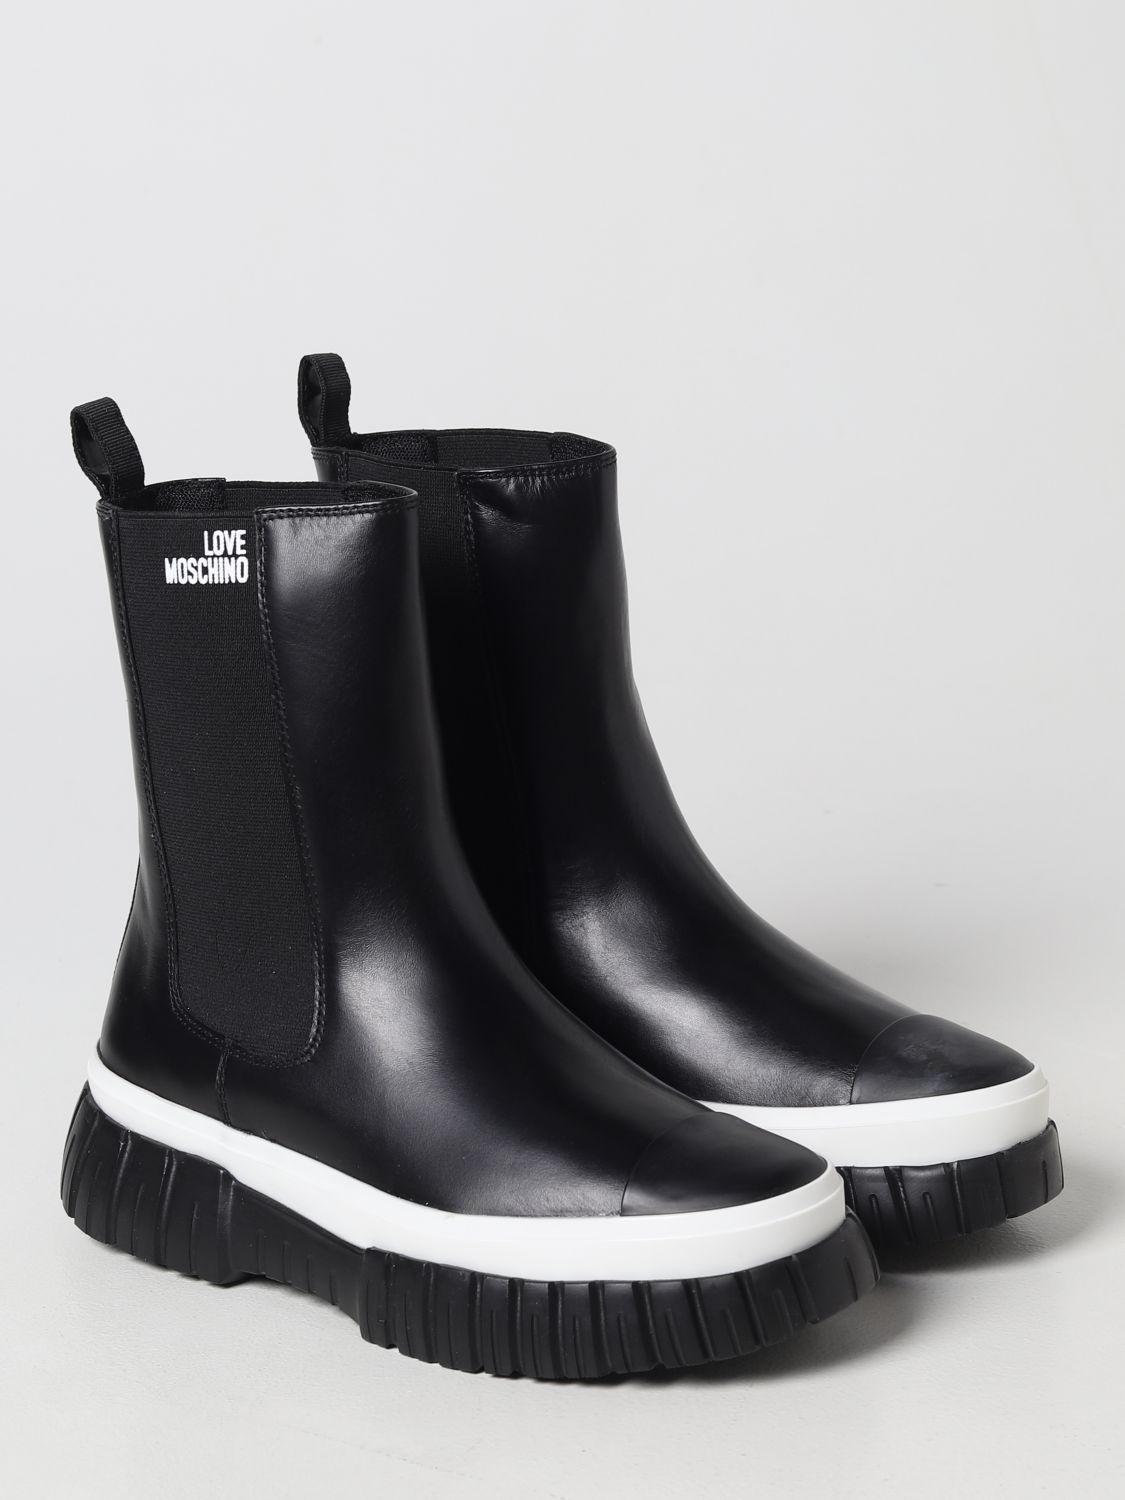 Kinderrijmpjes Toegangsprijs Beschaven Love Moschino Outlet: flat ankle boots for woman - Black 1 | Love Moschino  flat ankle boots JA15665G1FIA0 online on GIGLIO.COM